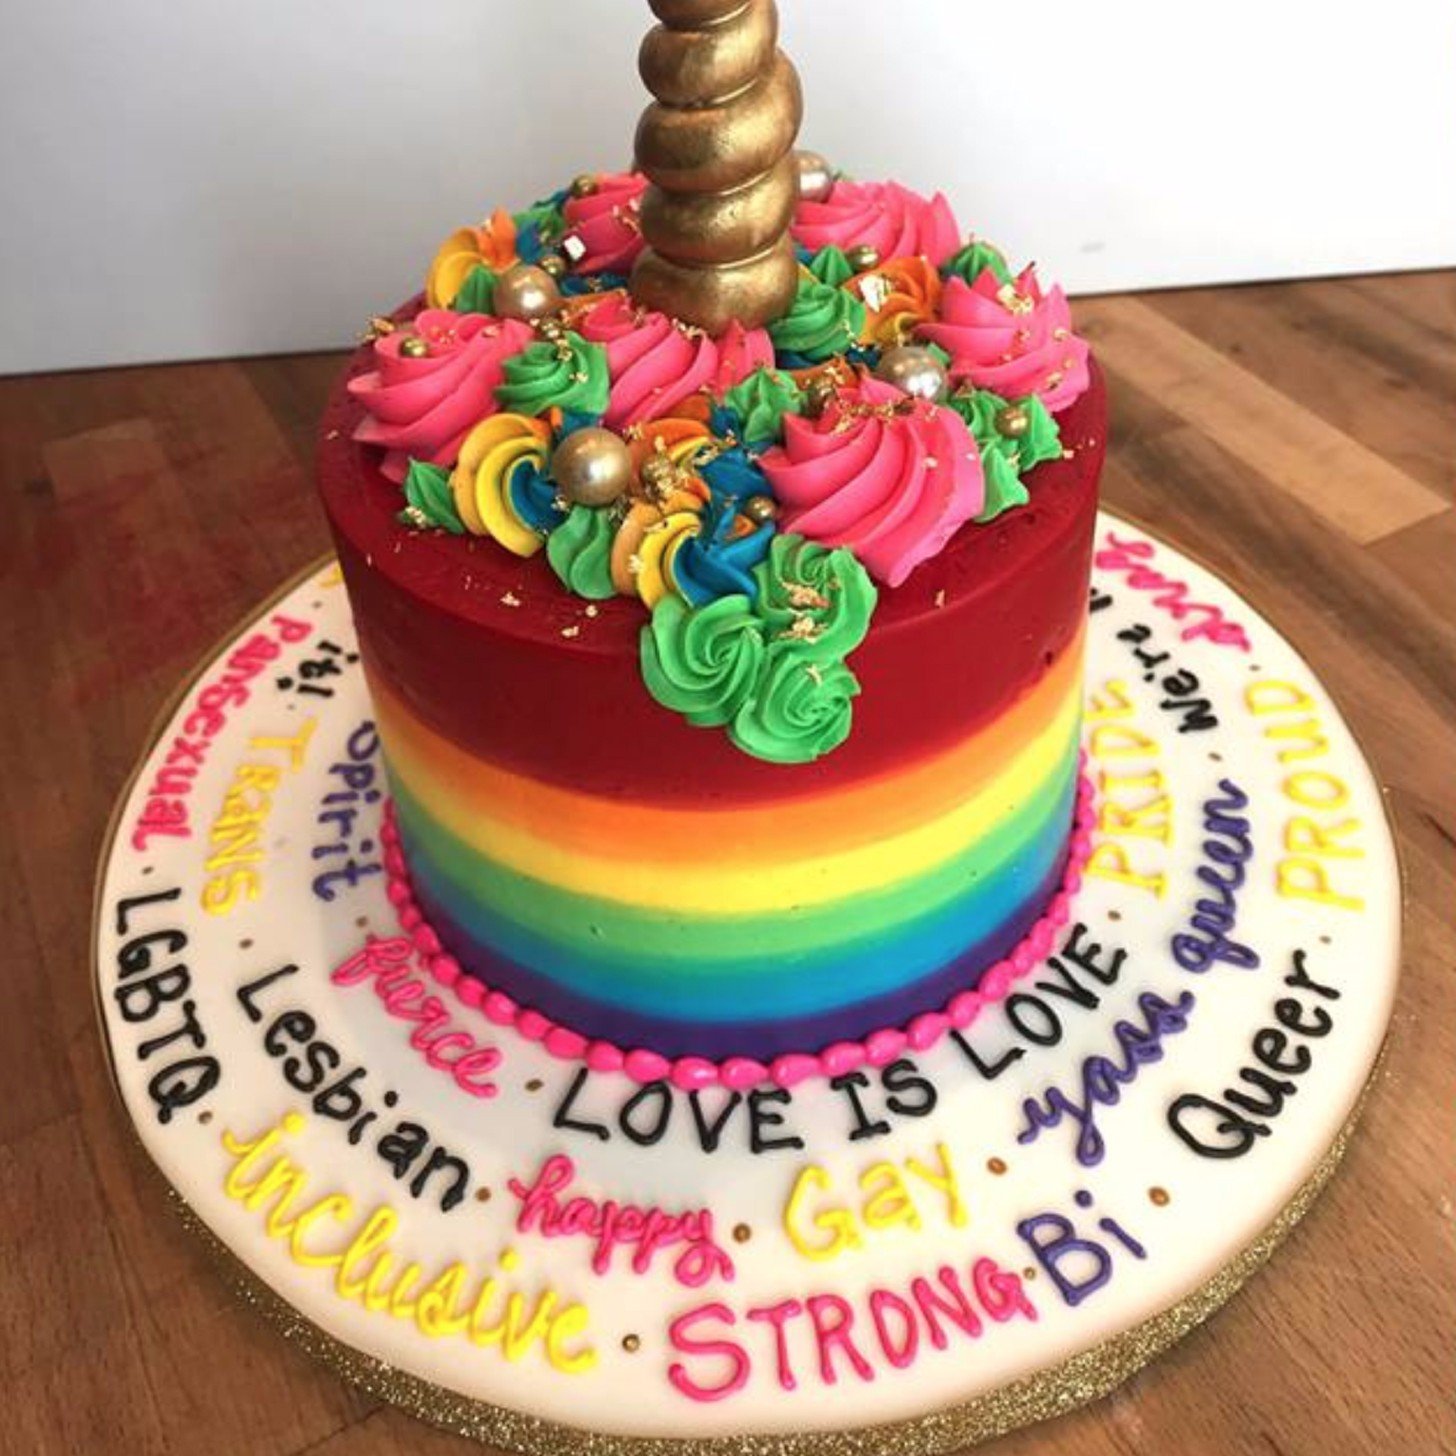 Canadian Bakery Makes Gayest Wedding Cake For Couple | POPSUGAR News